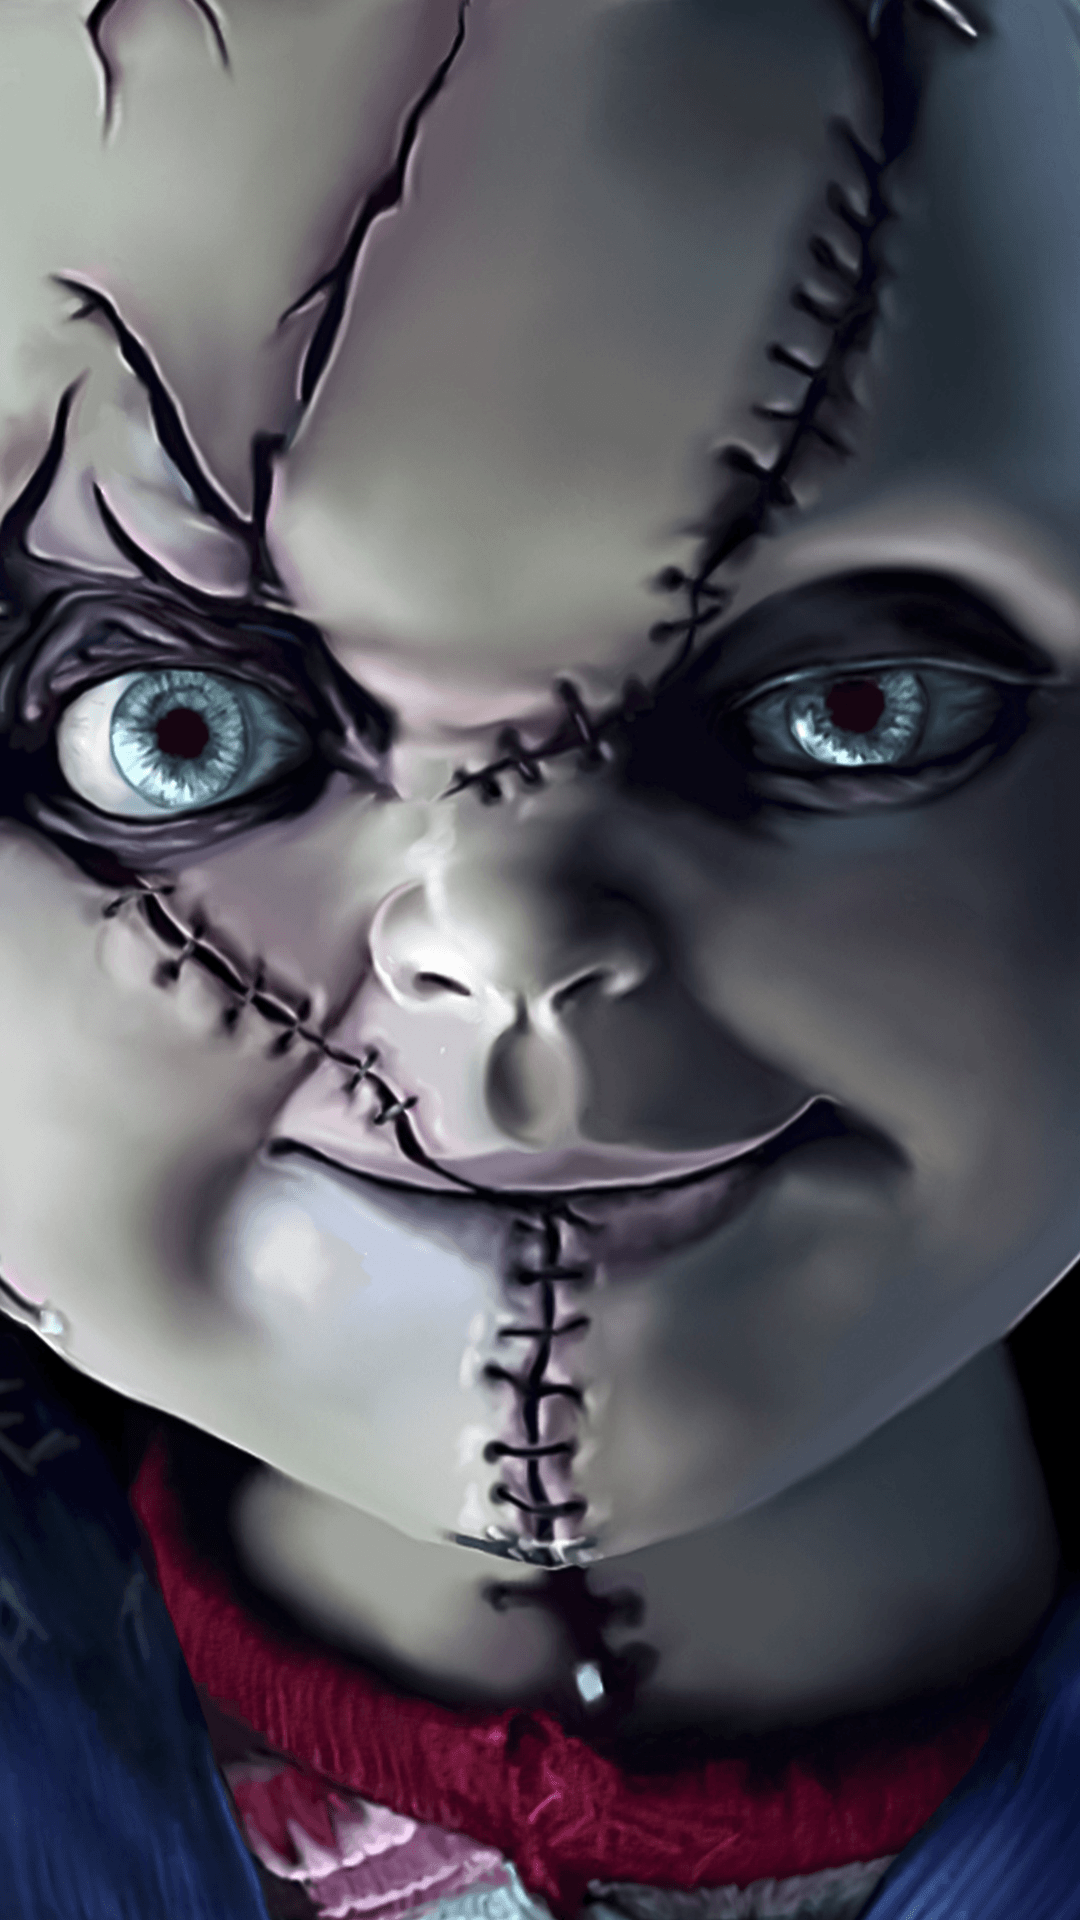 Chucky #doll #scary #nope #halloween #horrormovies. iPhone 6